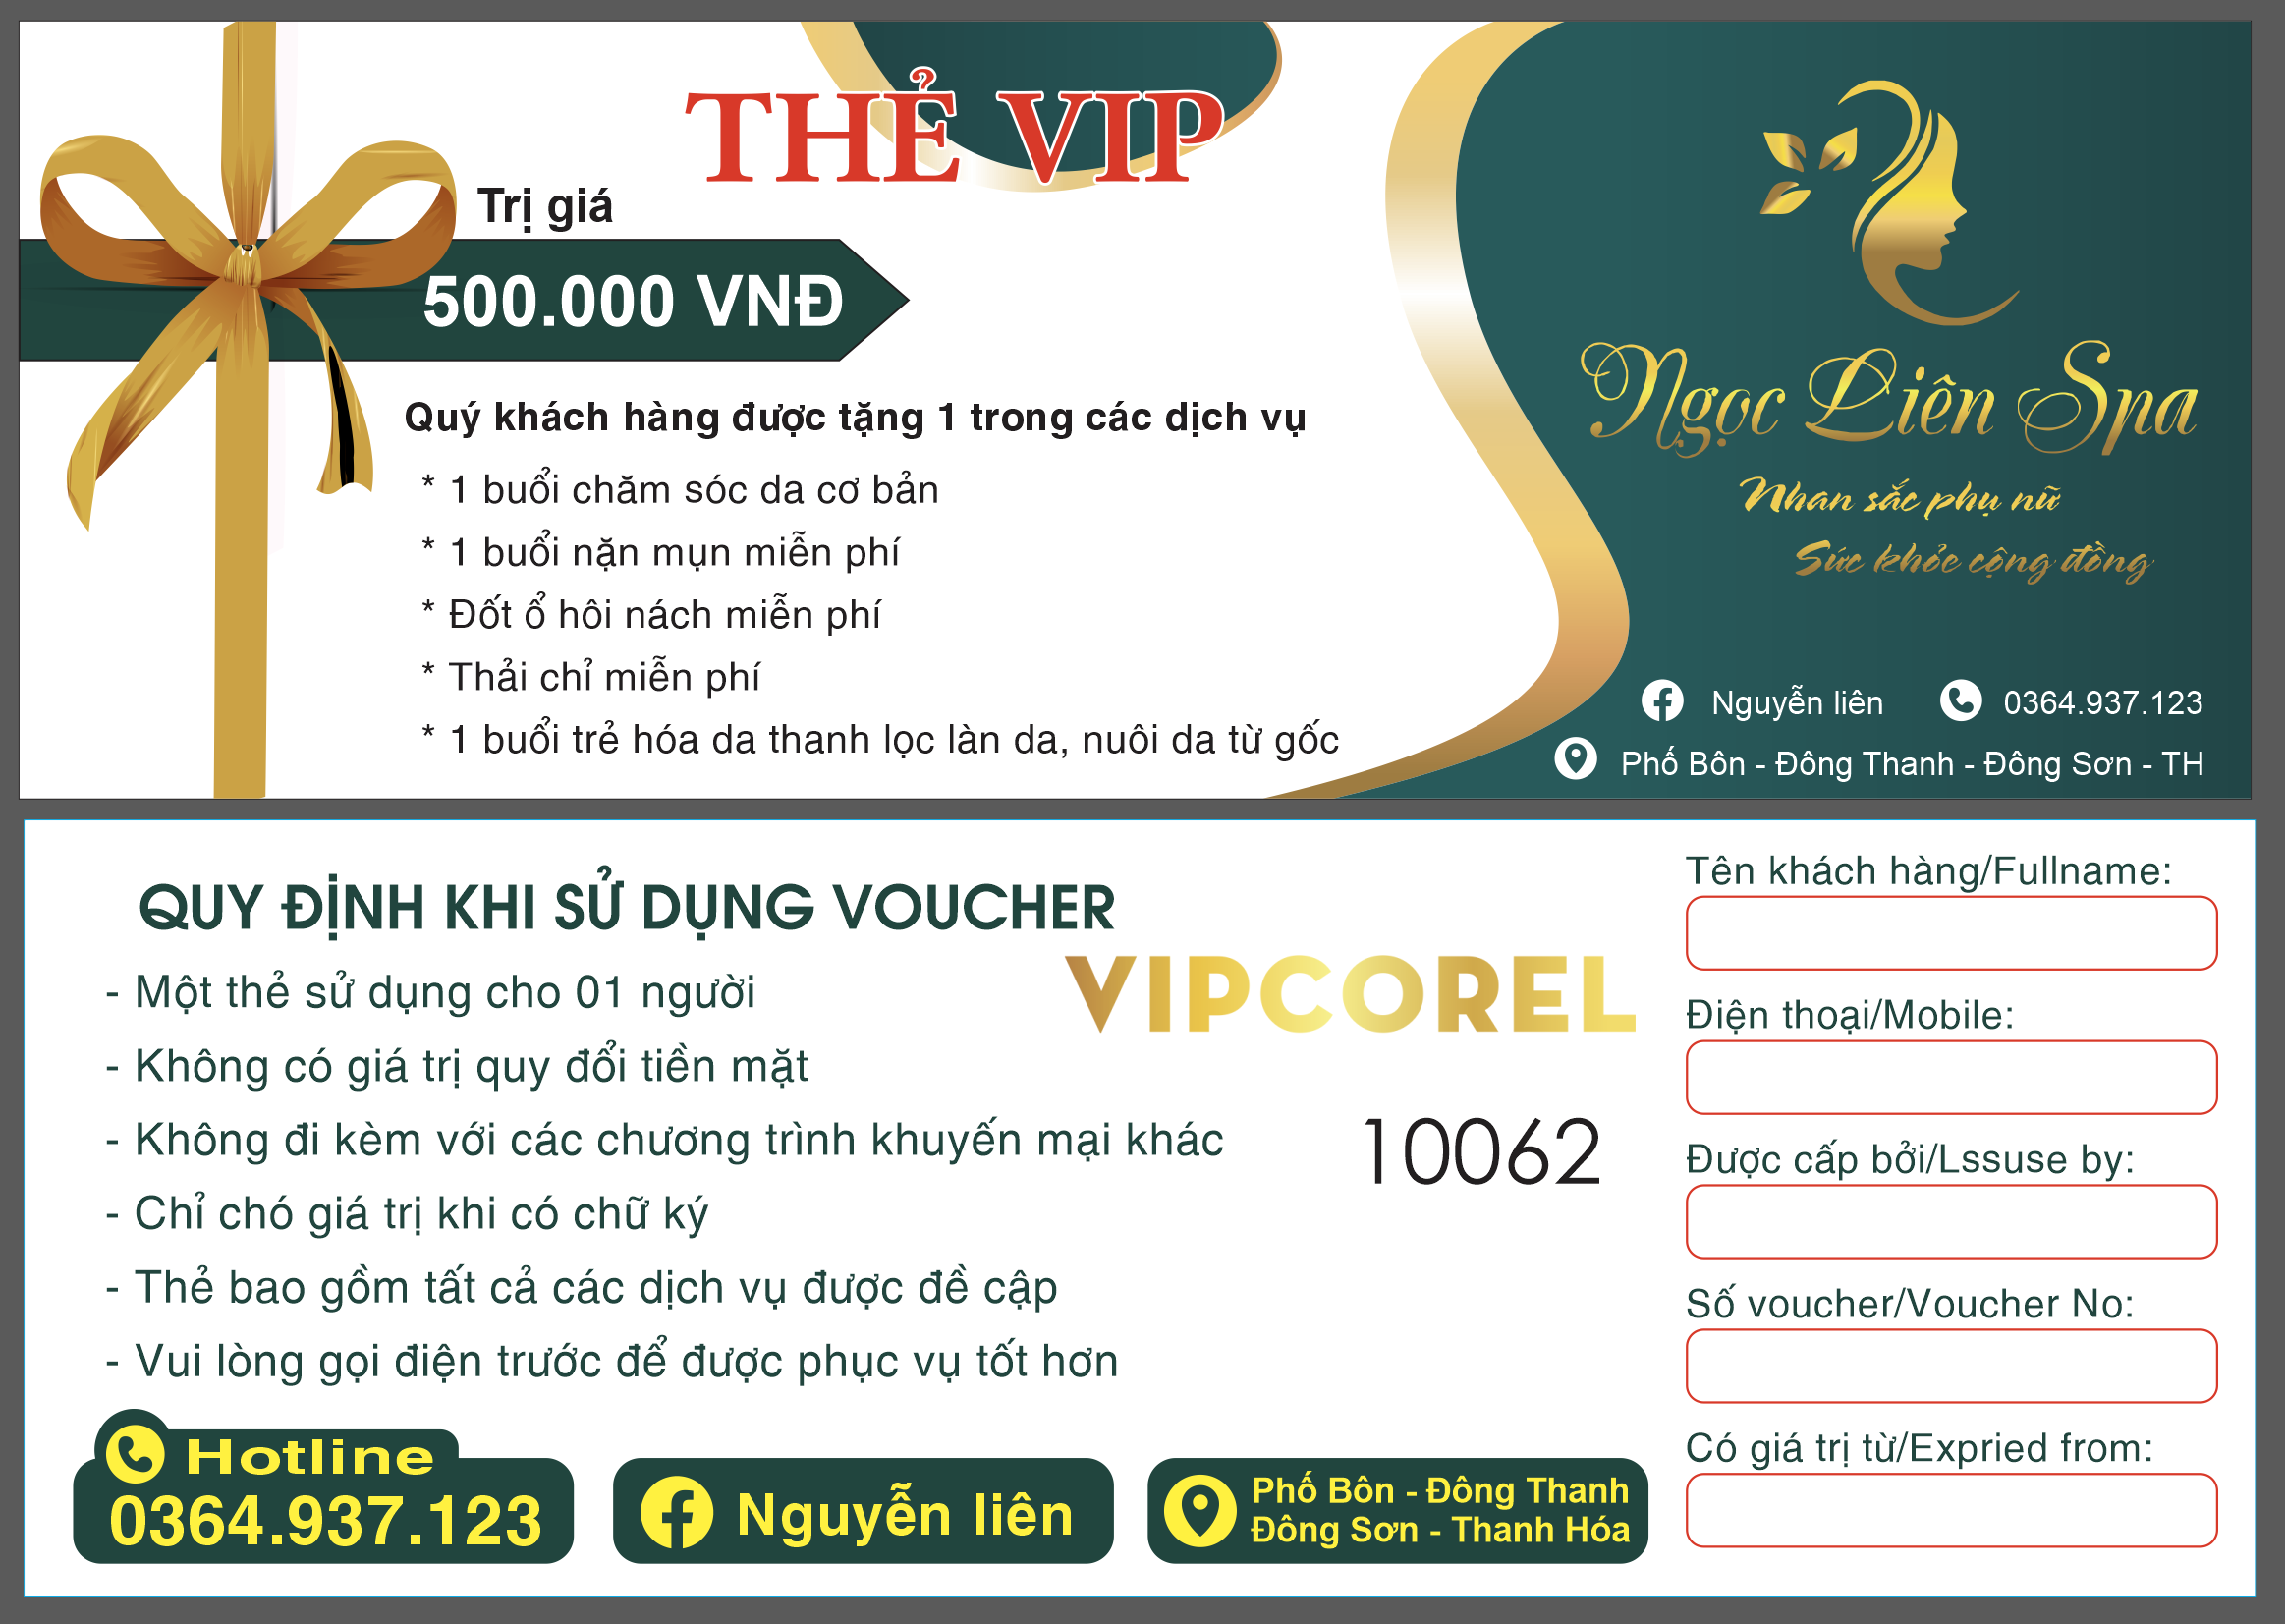 the vip voucher ngoc lien spa.png